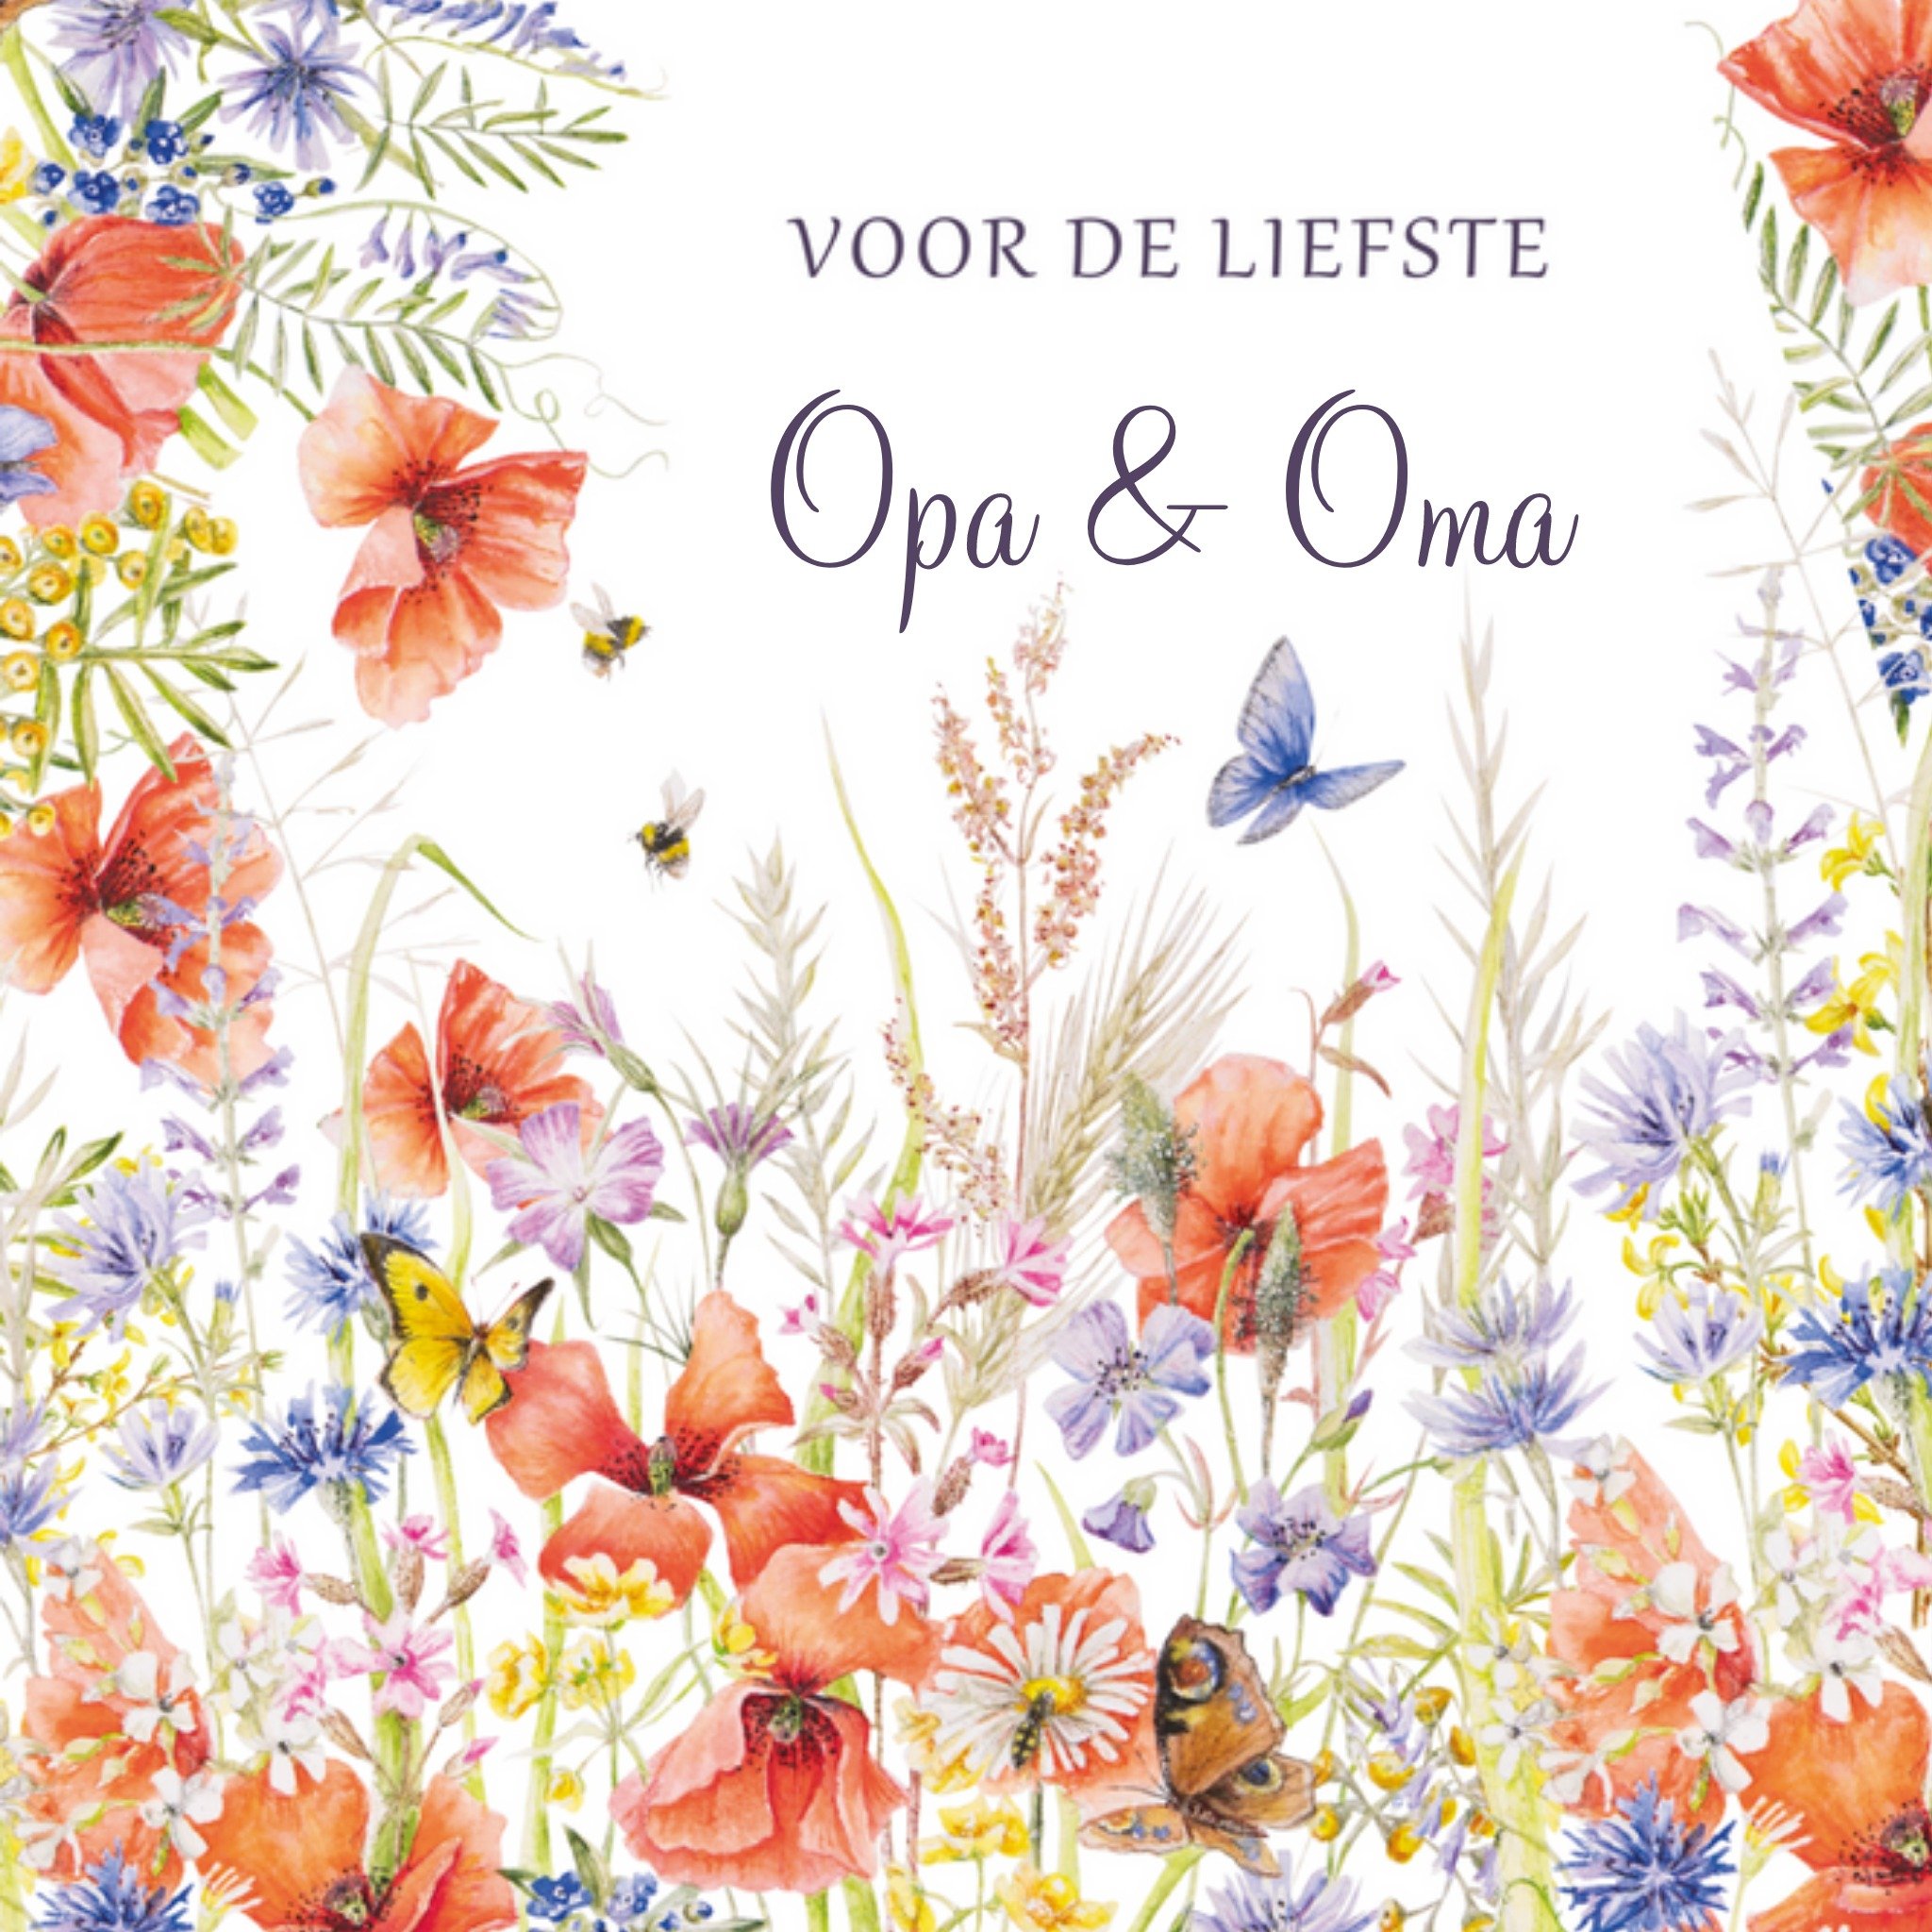 Janneke Brinkman - Opa en oma dag - bloemen